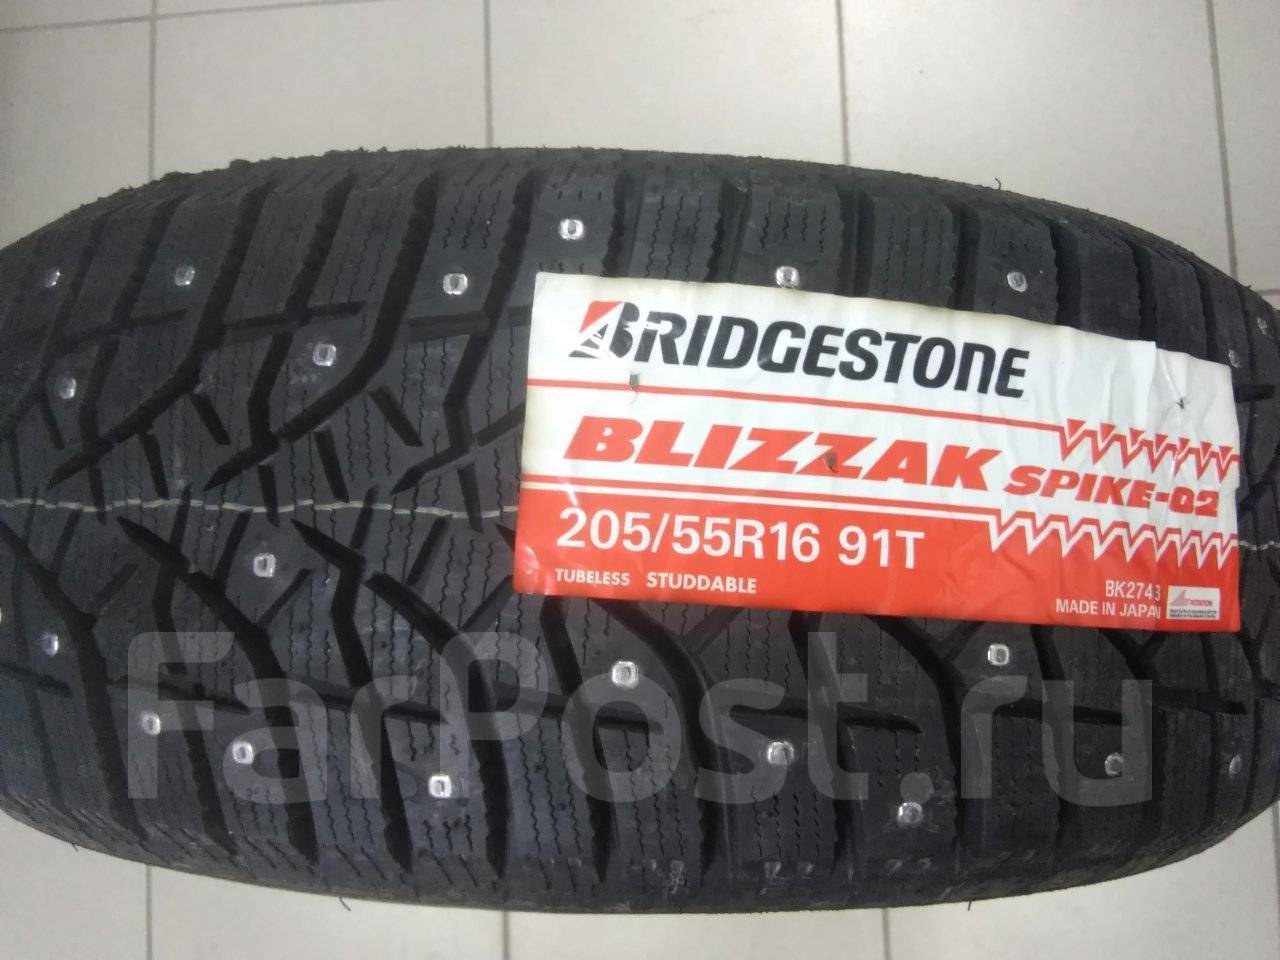 Bridgestone blizzak spike 02 205 55 r16. Bridgestone Blizzak Spike-02 205/55 r16 91t. Bridgestone Blizzak Spike-02. Bridgestone Spike-02 205/55 r16.